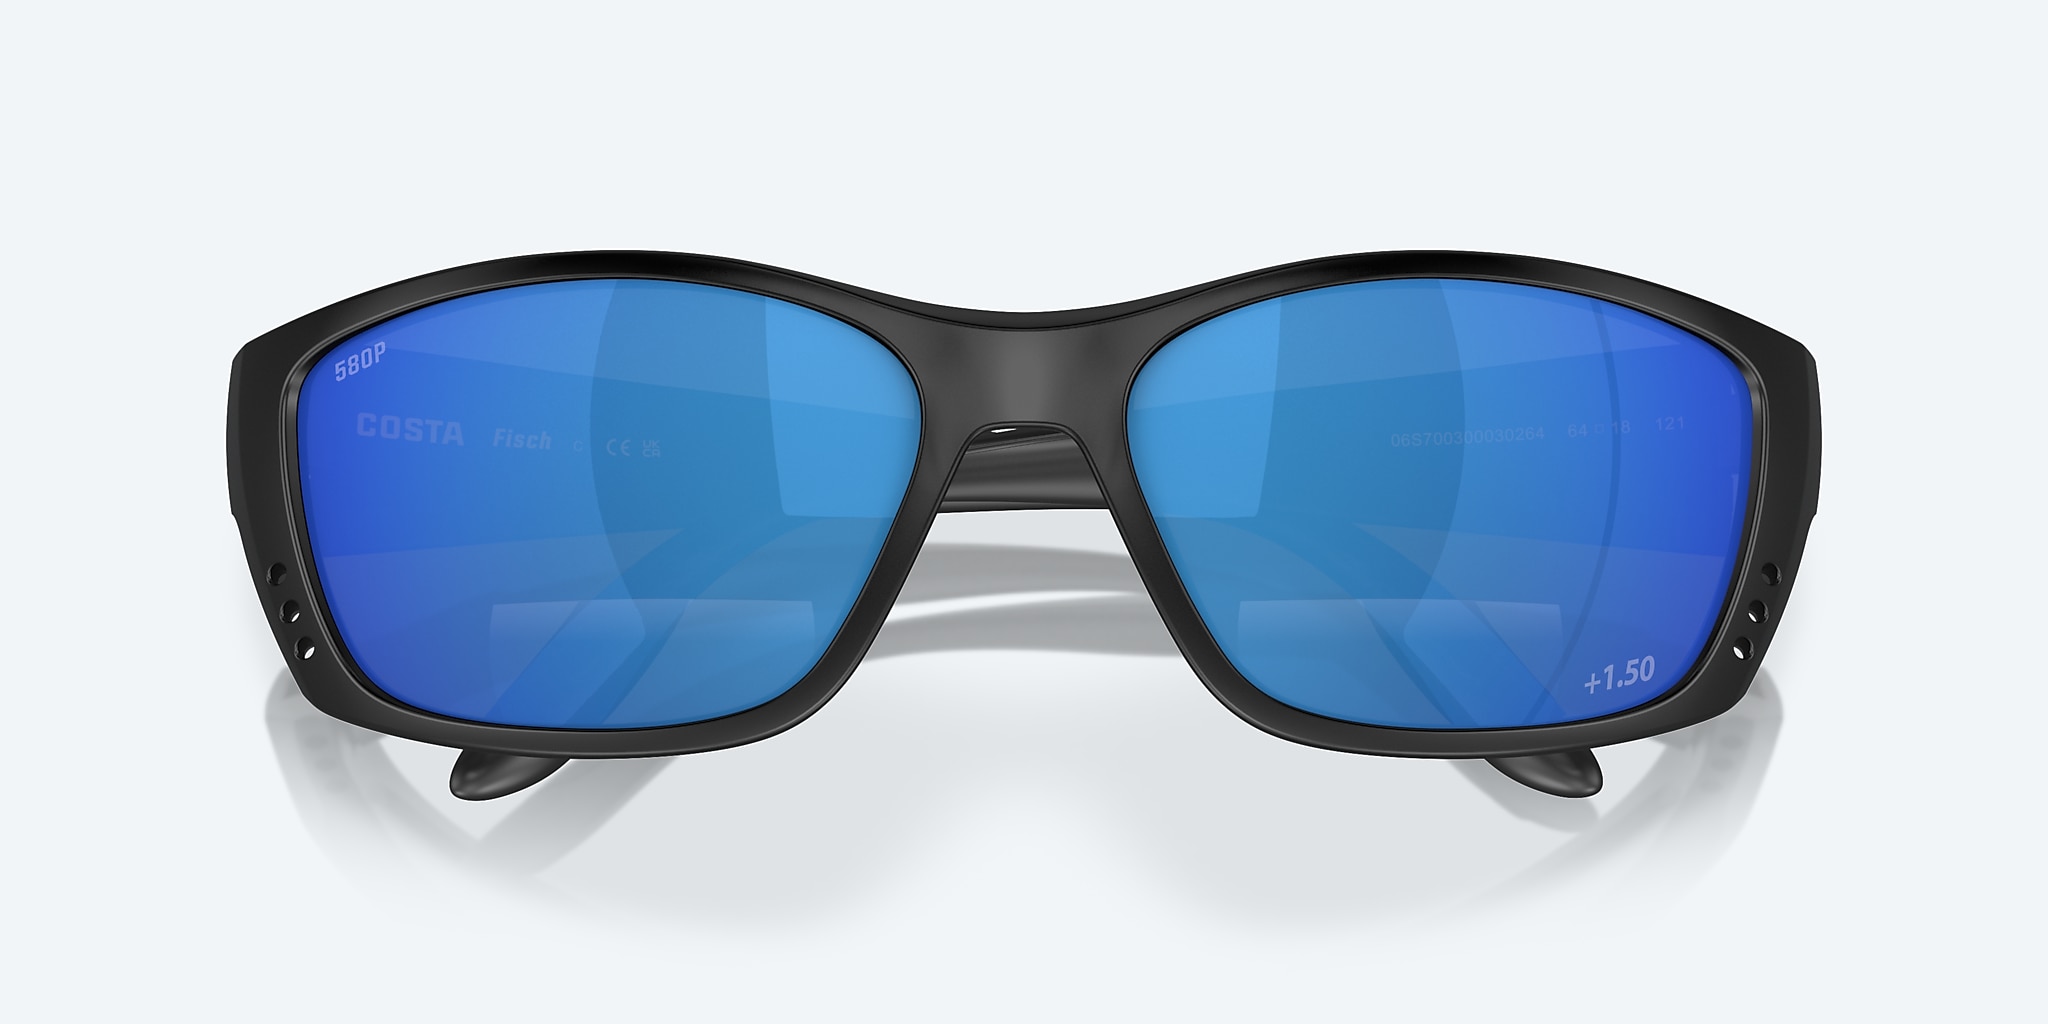 Fisch Readers Polarized Sunglasses in Blue Mirror